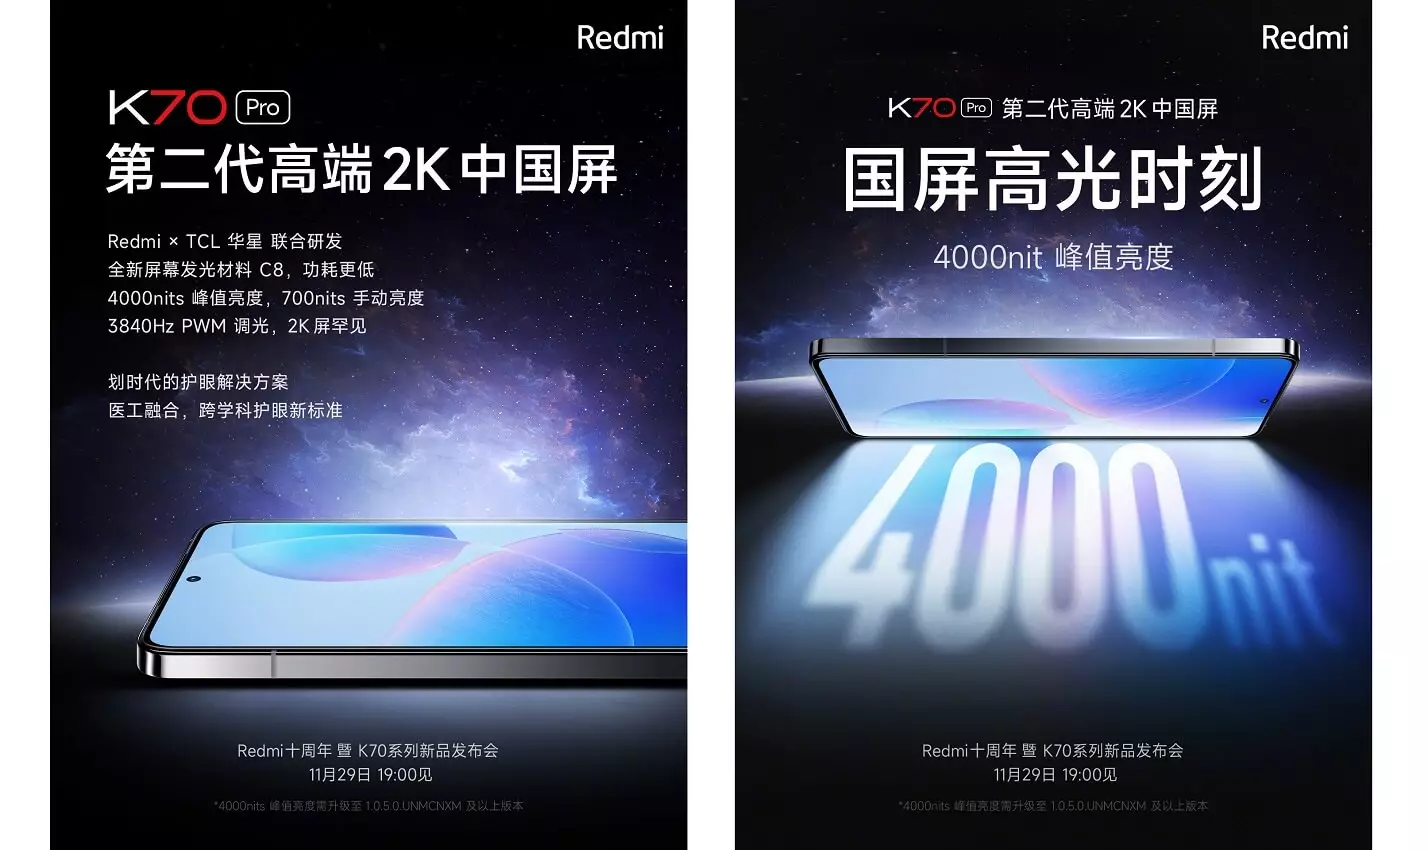 Redmi K70 Pro features 1.